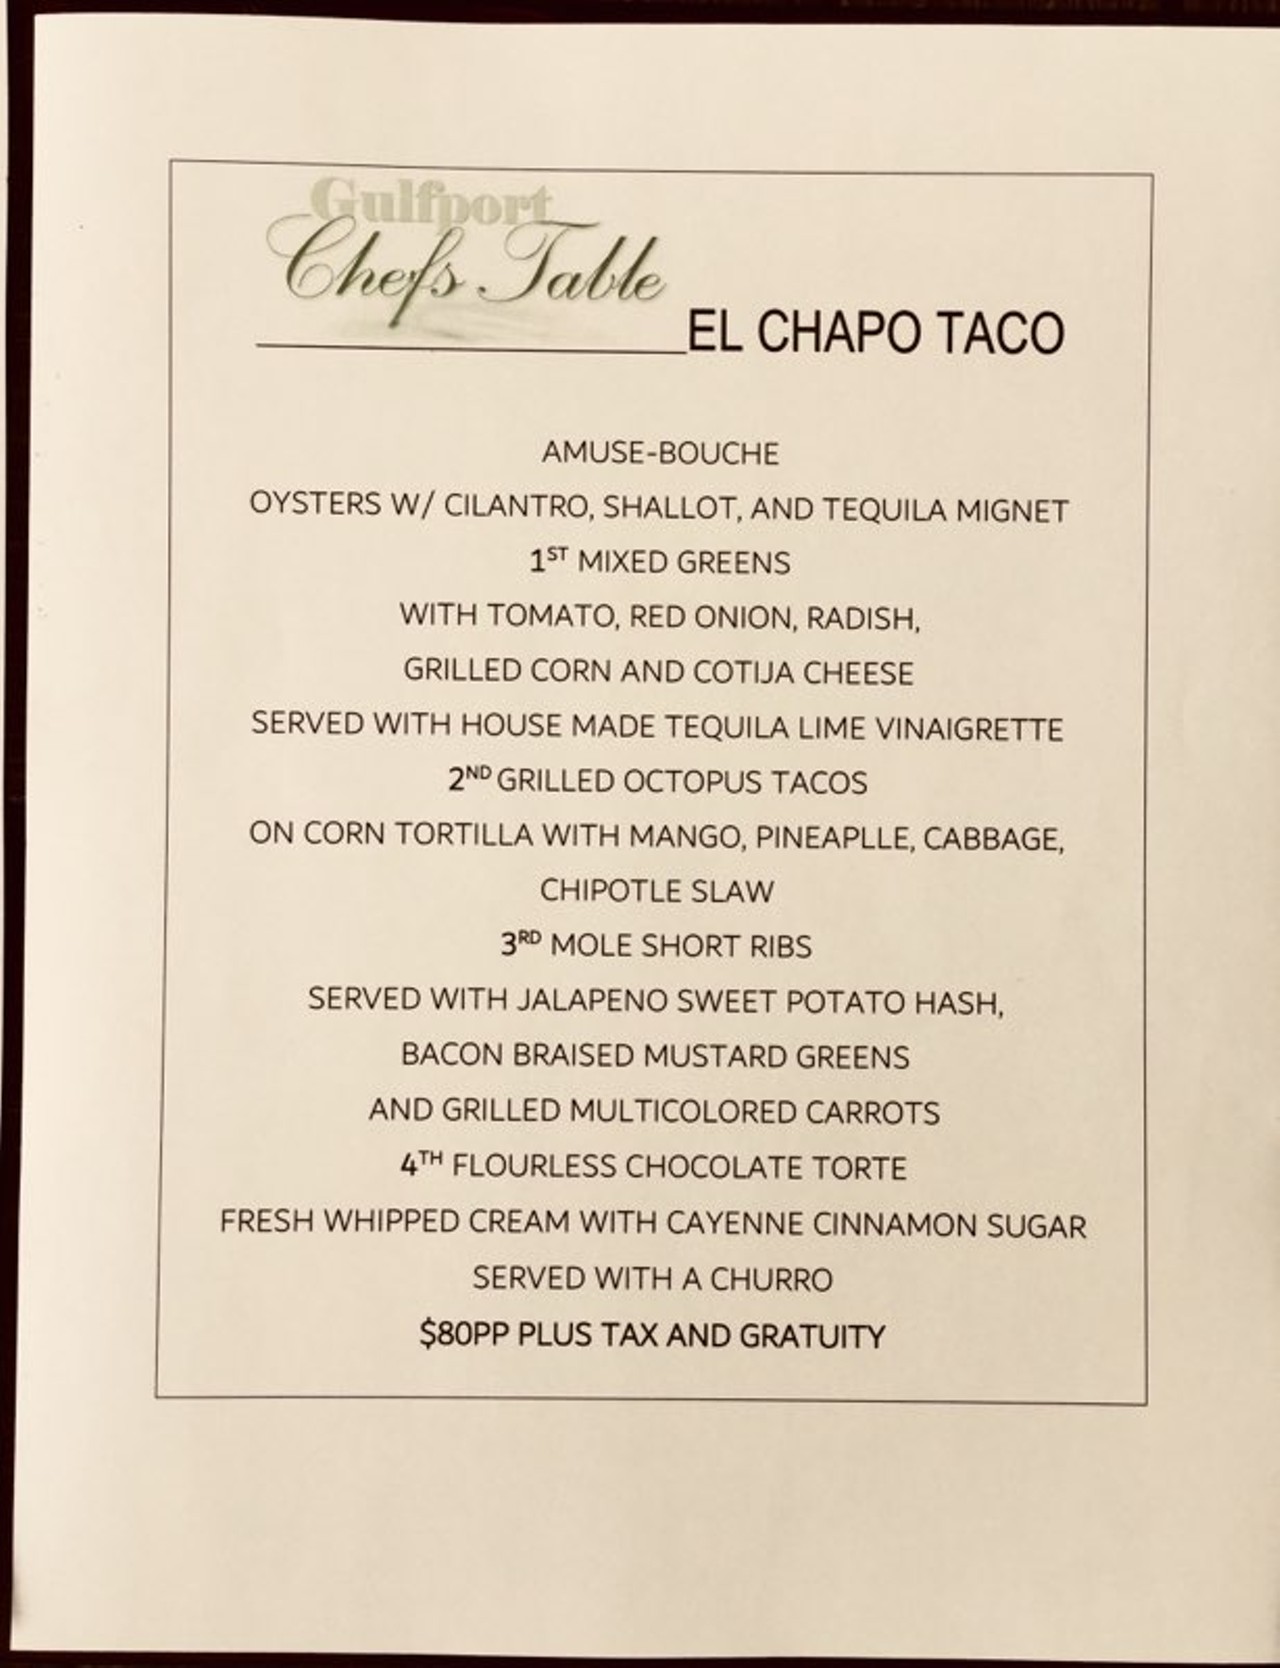 Gulfport Chef's Table 2018 El Chapo Taco's menu